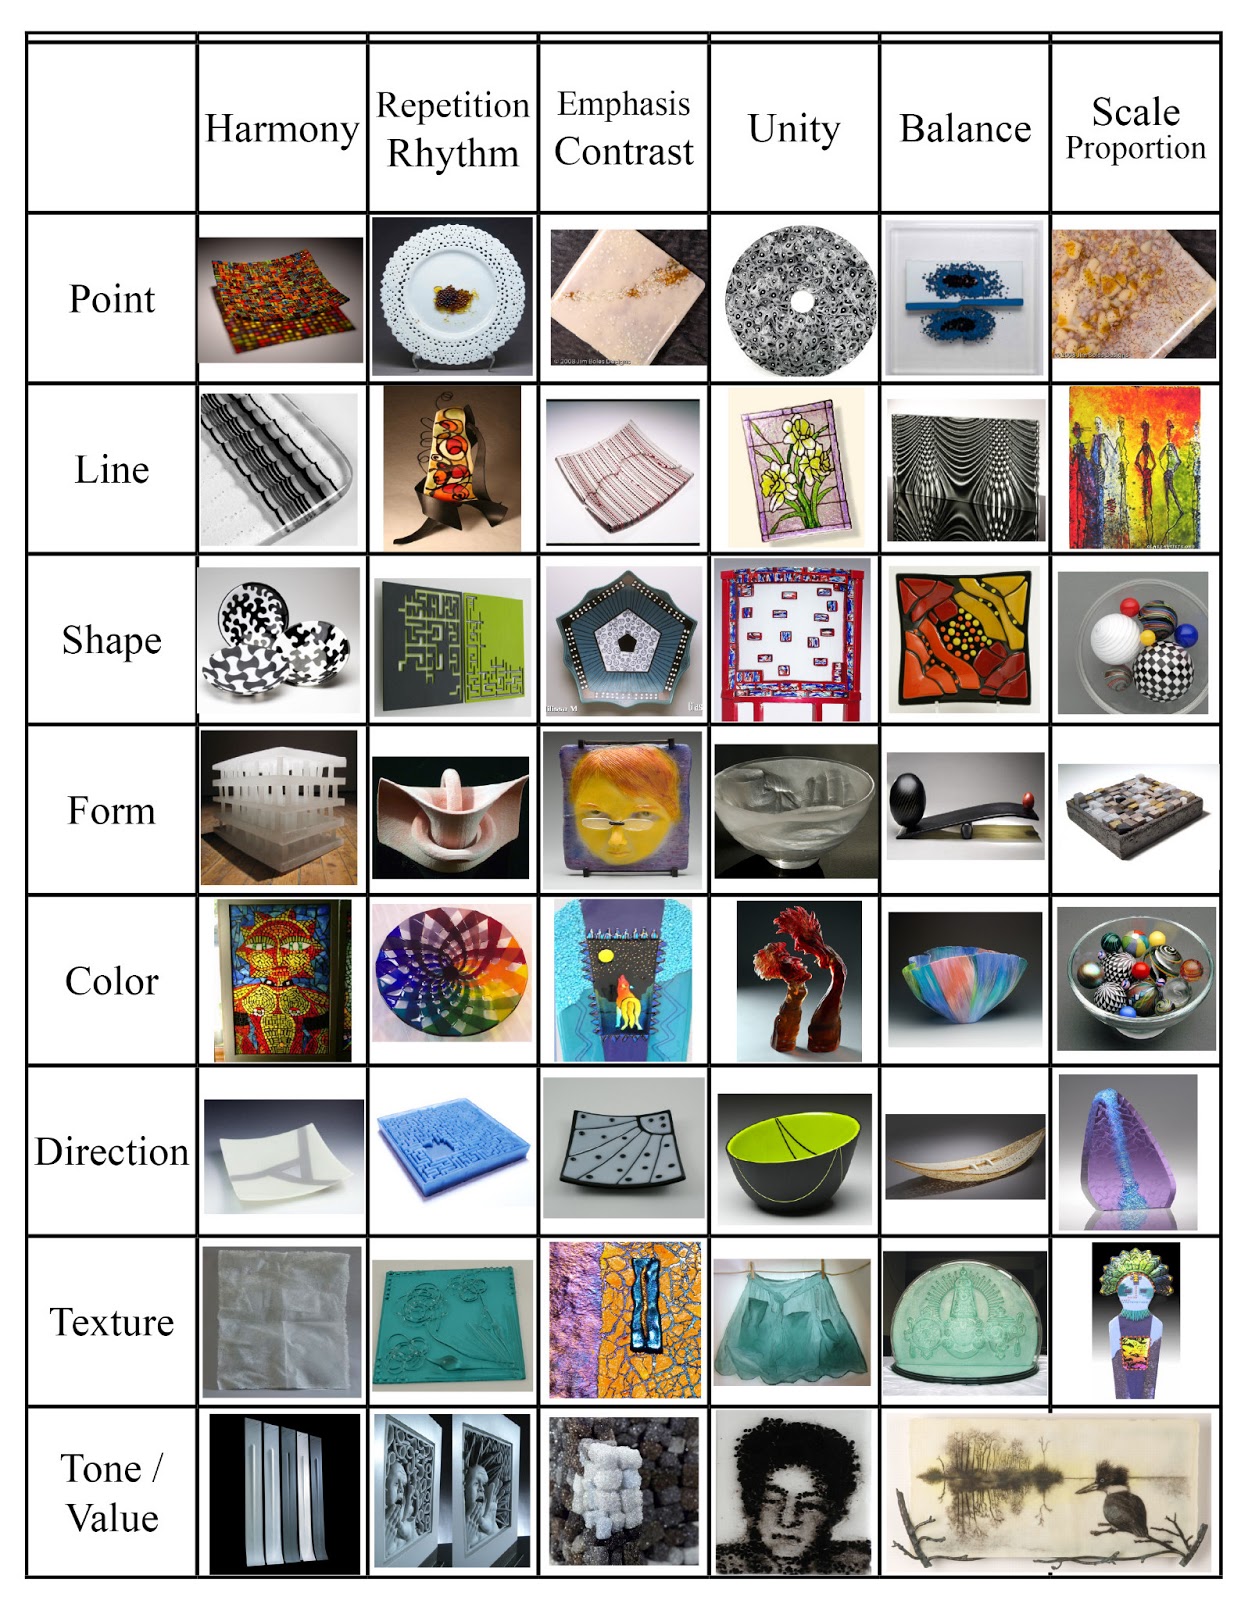 Jim Boles Designs: Elements & Principles of Design in Glass Art (Image